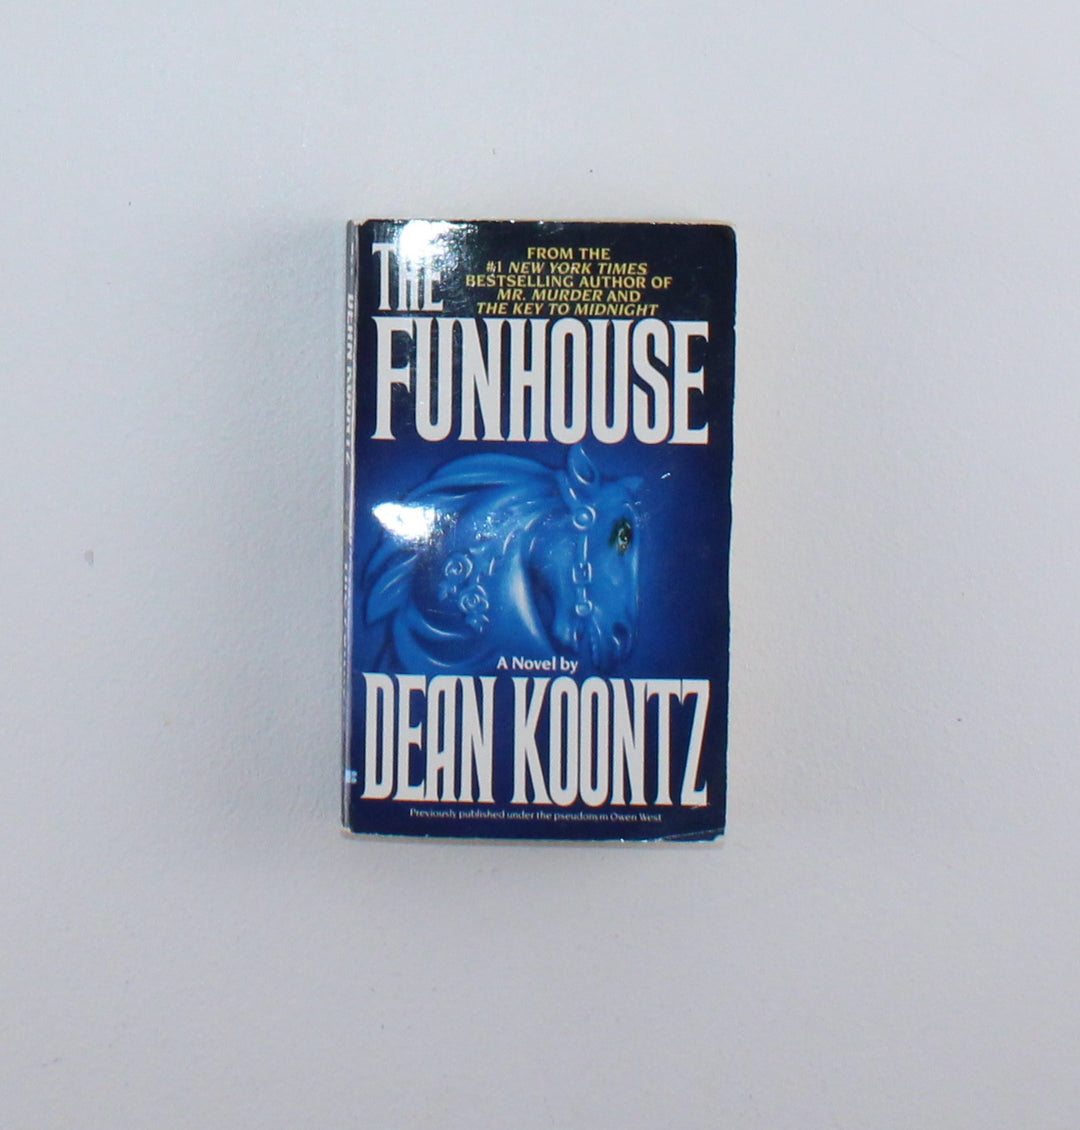 THE FUNHOUSE, DEAN KOONTZ NOVEL